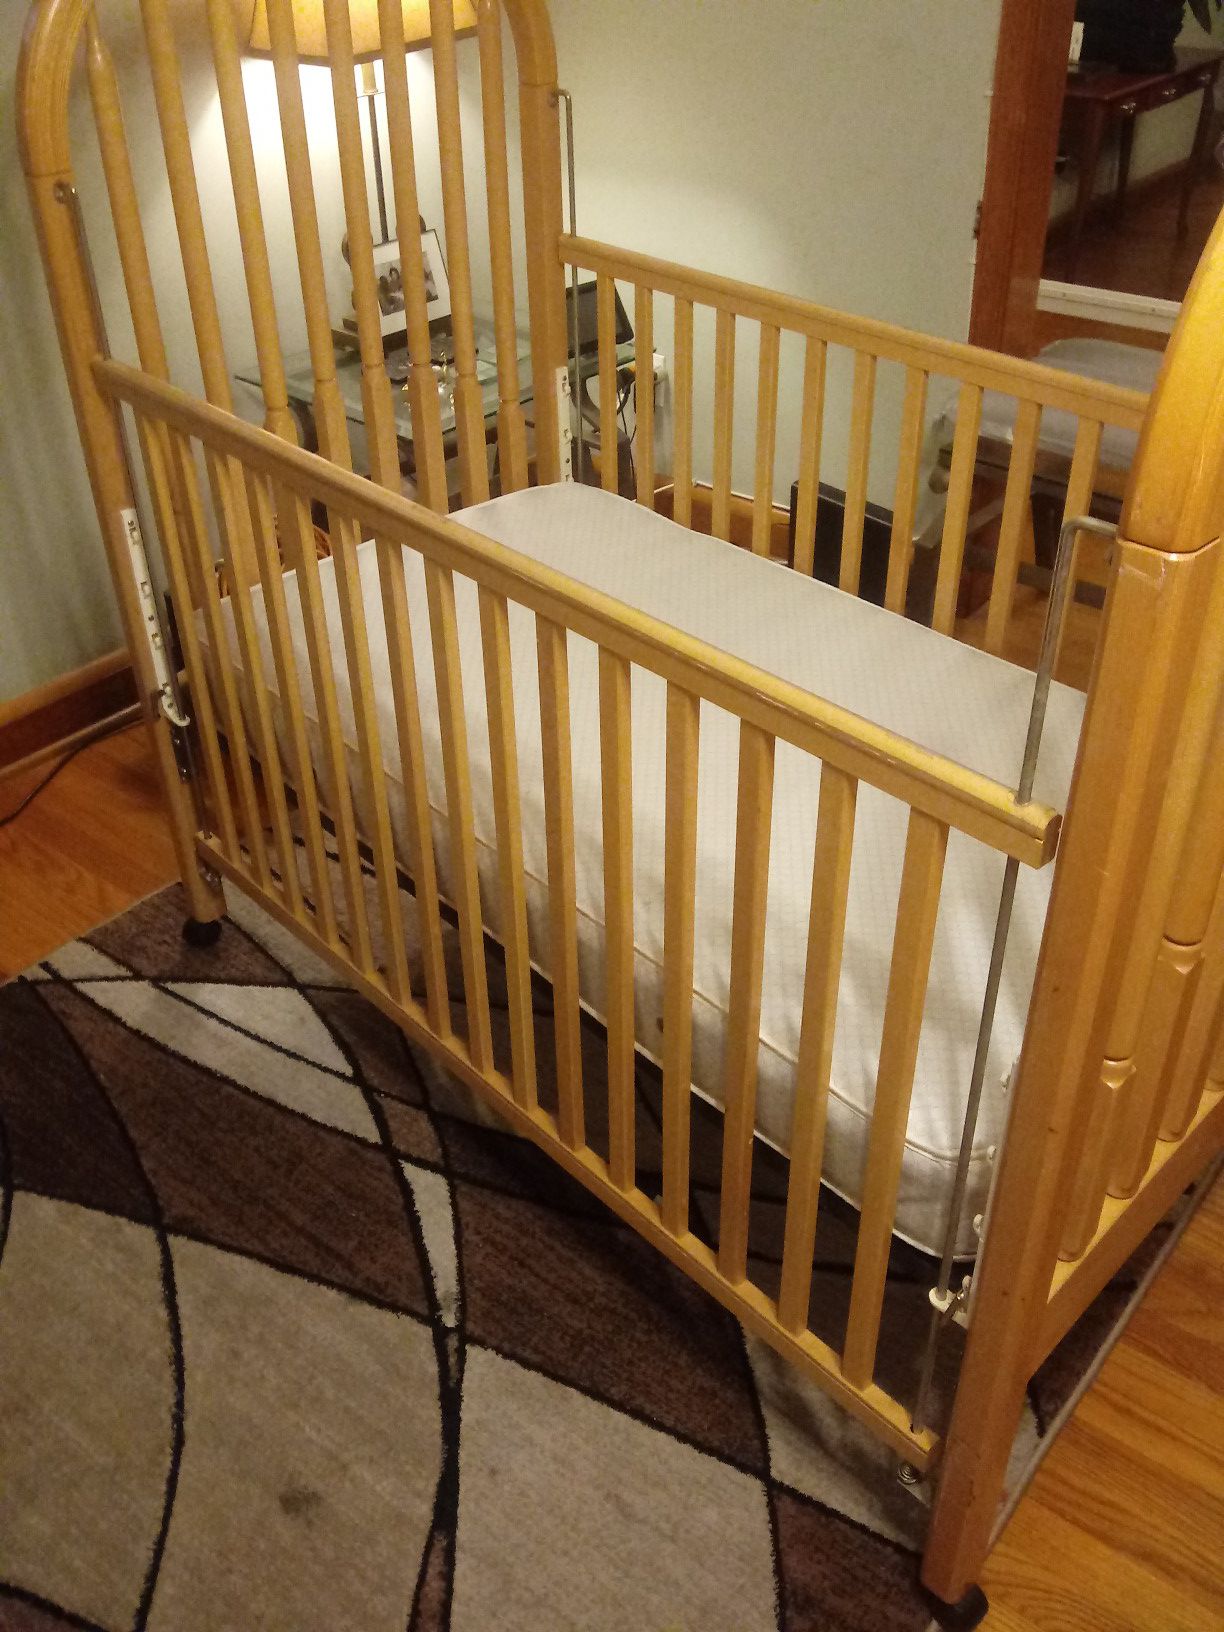 Simmons baby crib with mattress $30